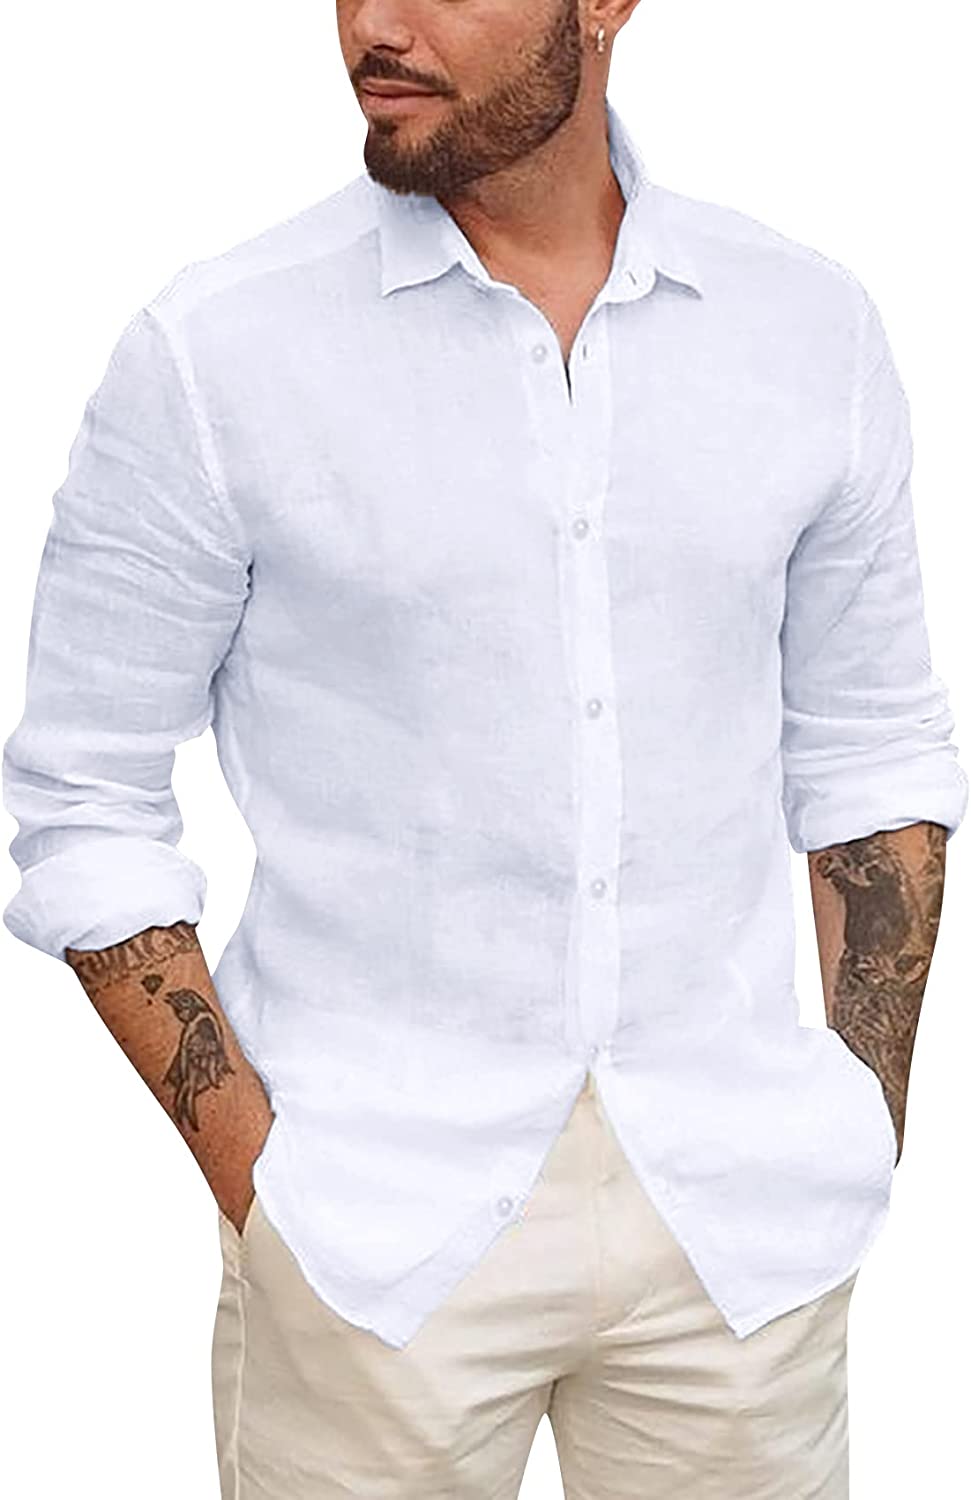 Men's Shirts & Button Up's